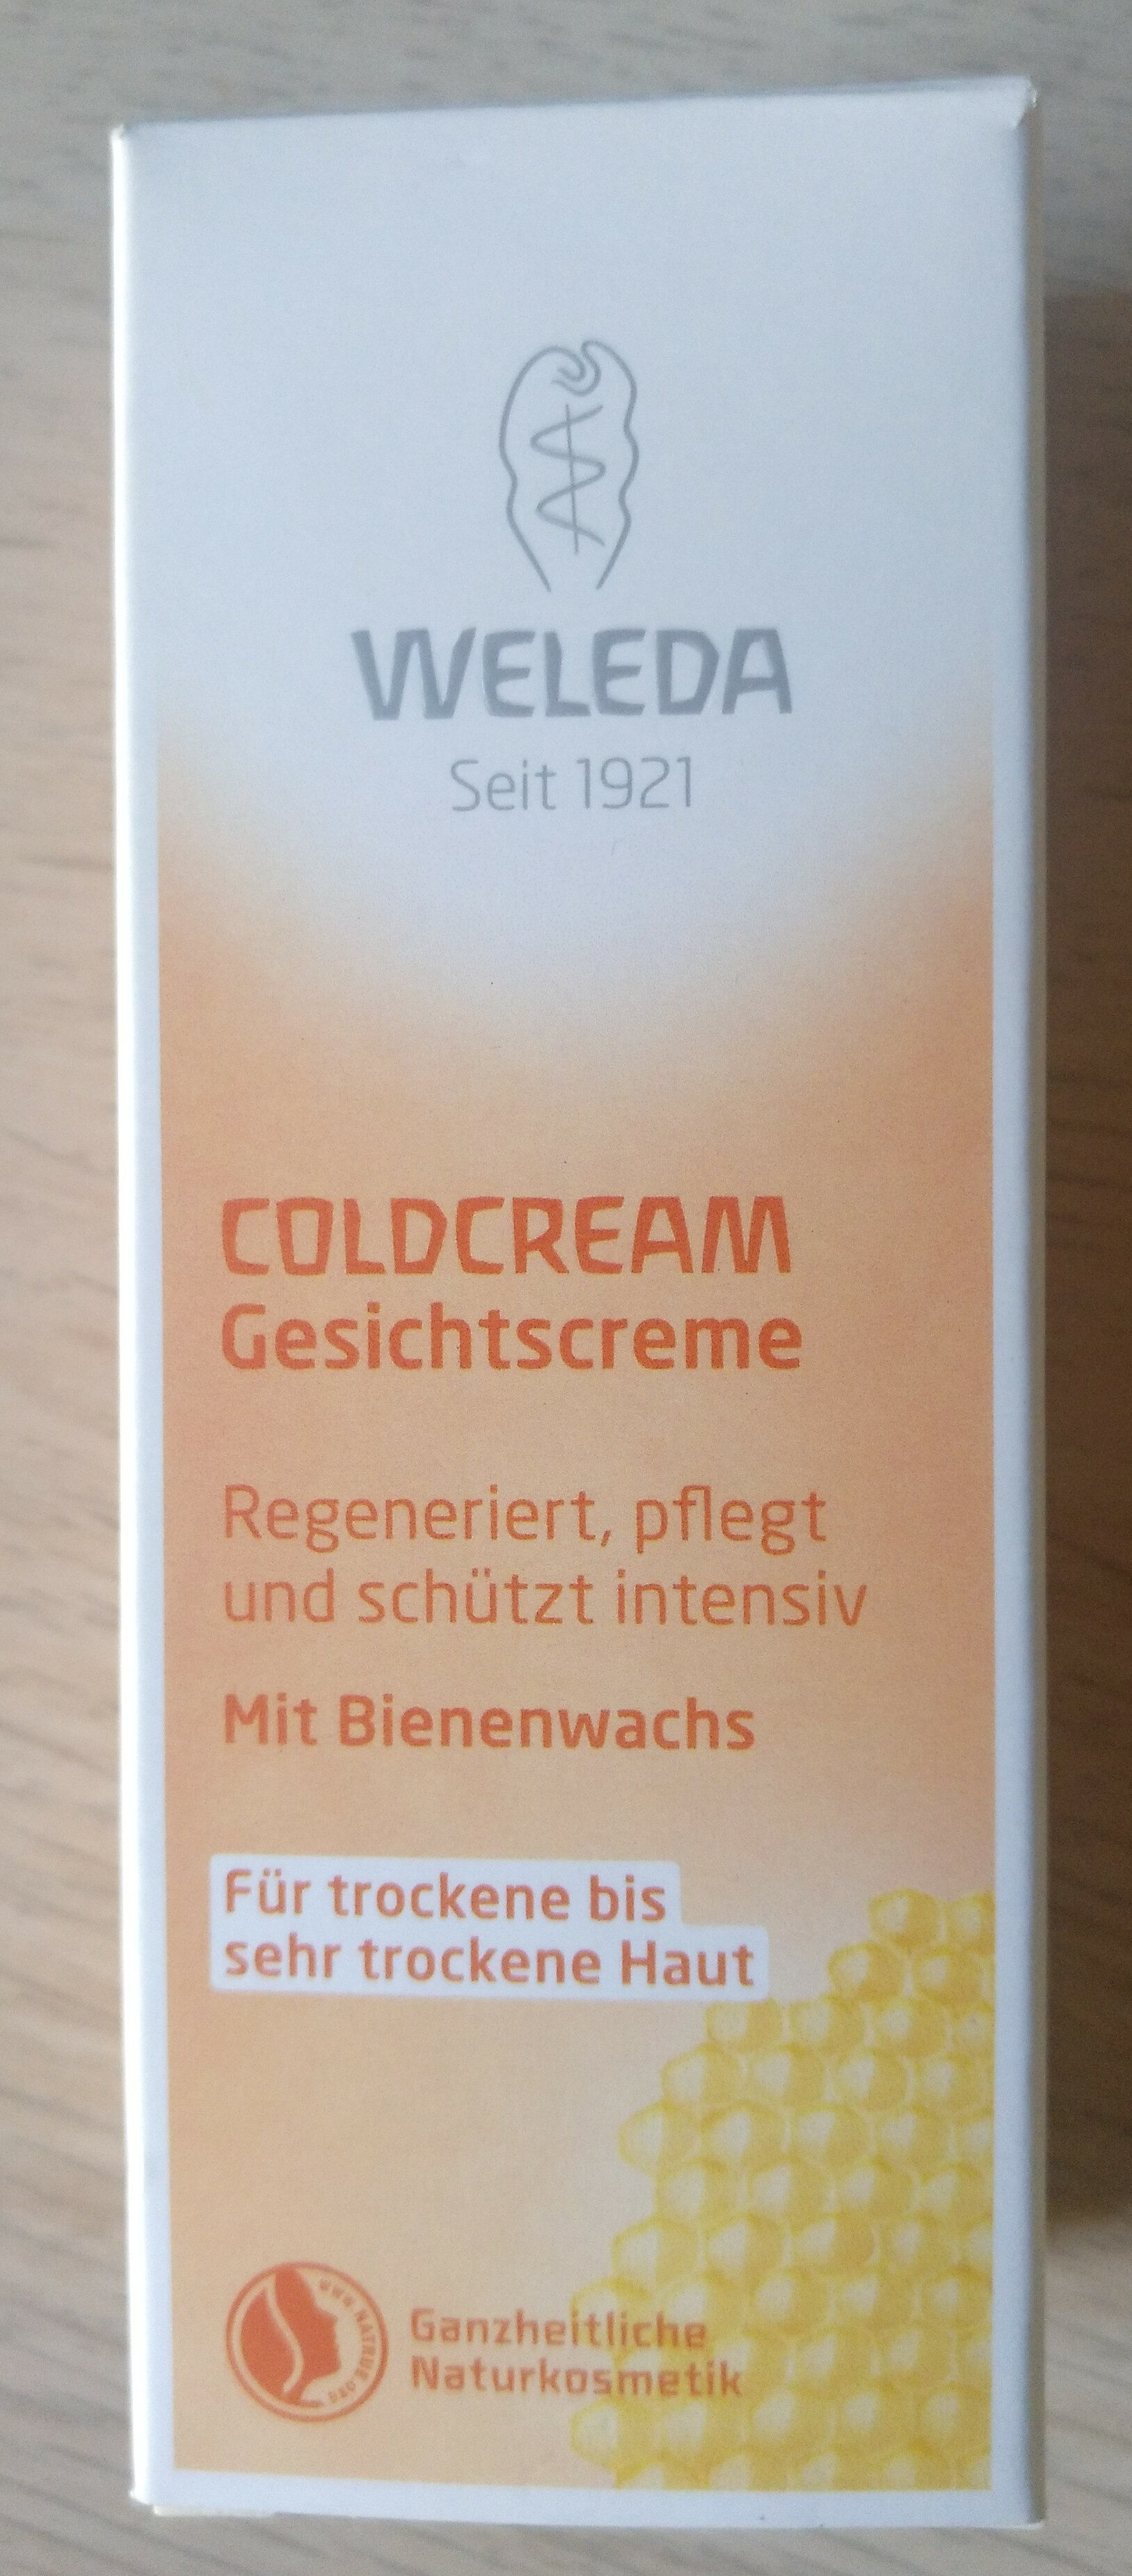 Coldcream Gesichtscreme - Product - de